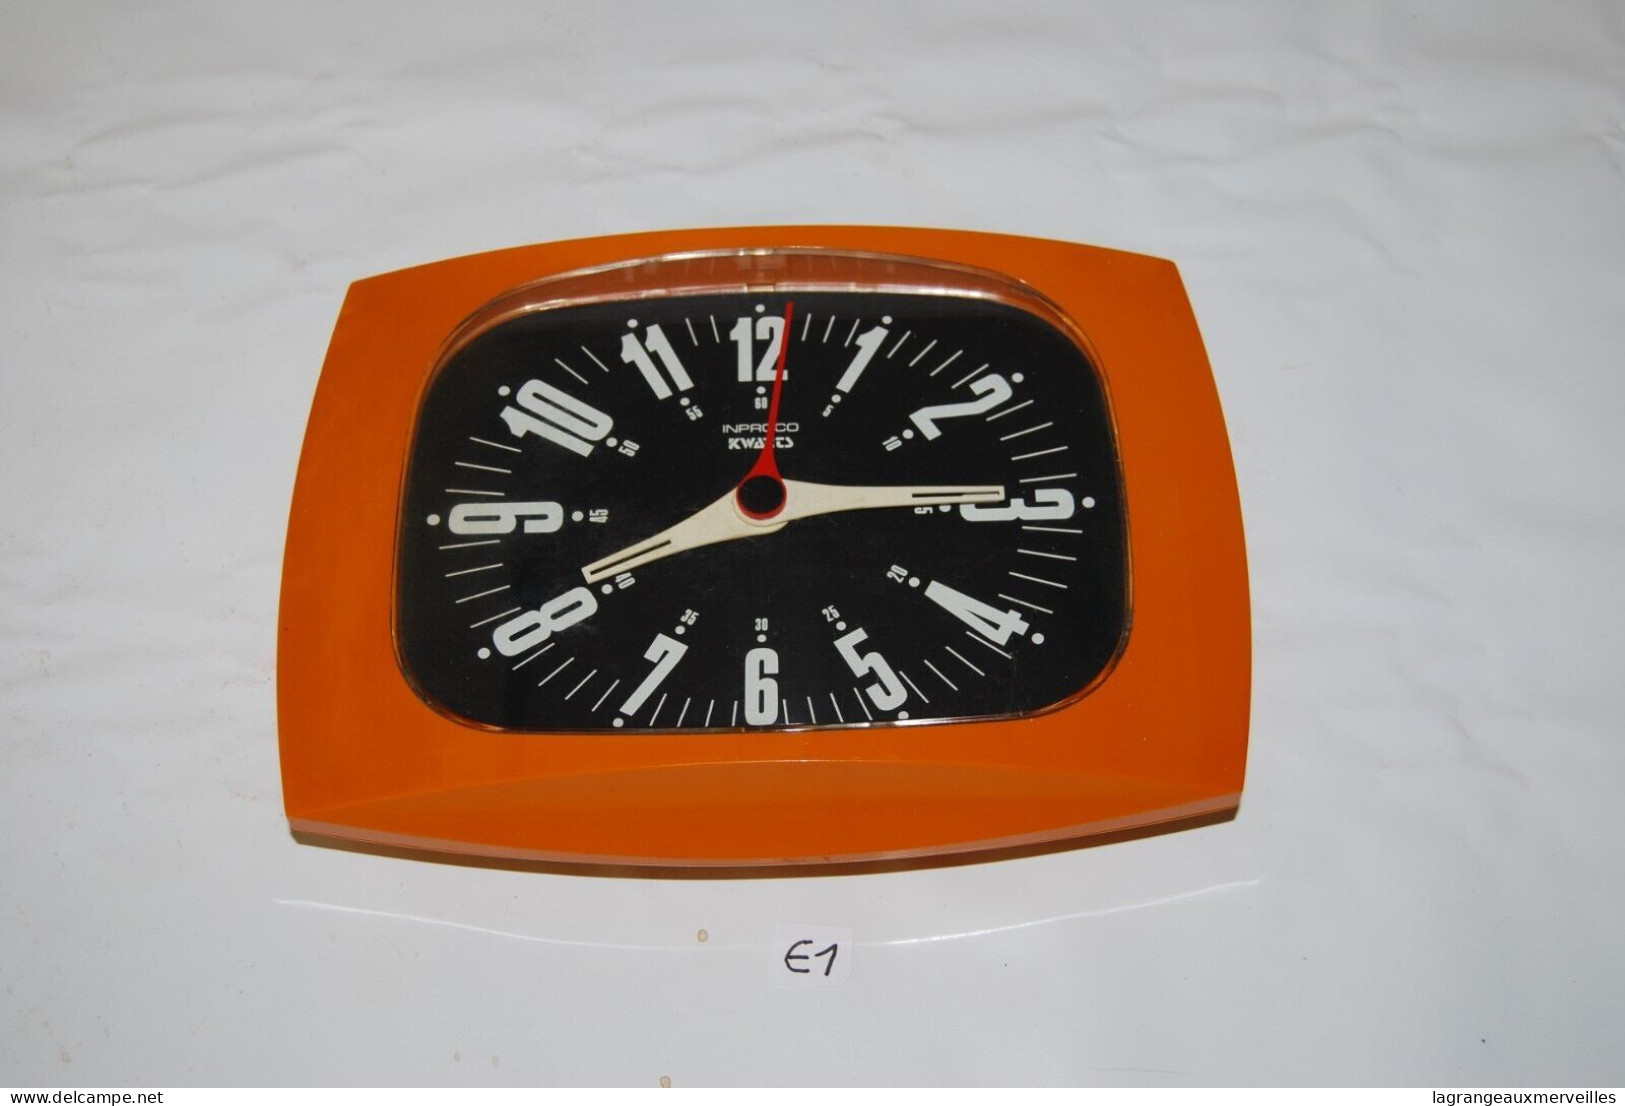 E1 Ancienne Horloge INPROCO Kwartz - Vintage - Orange - Clocks